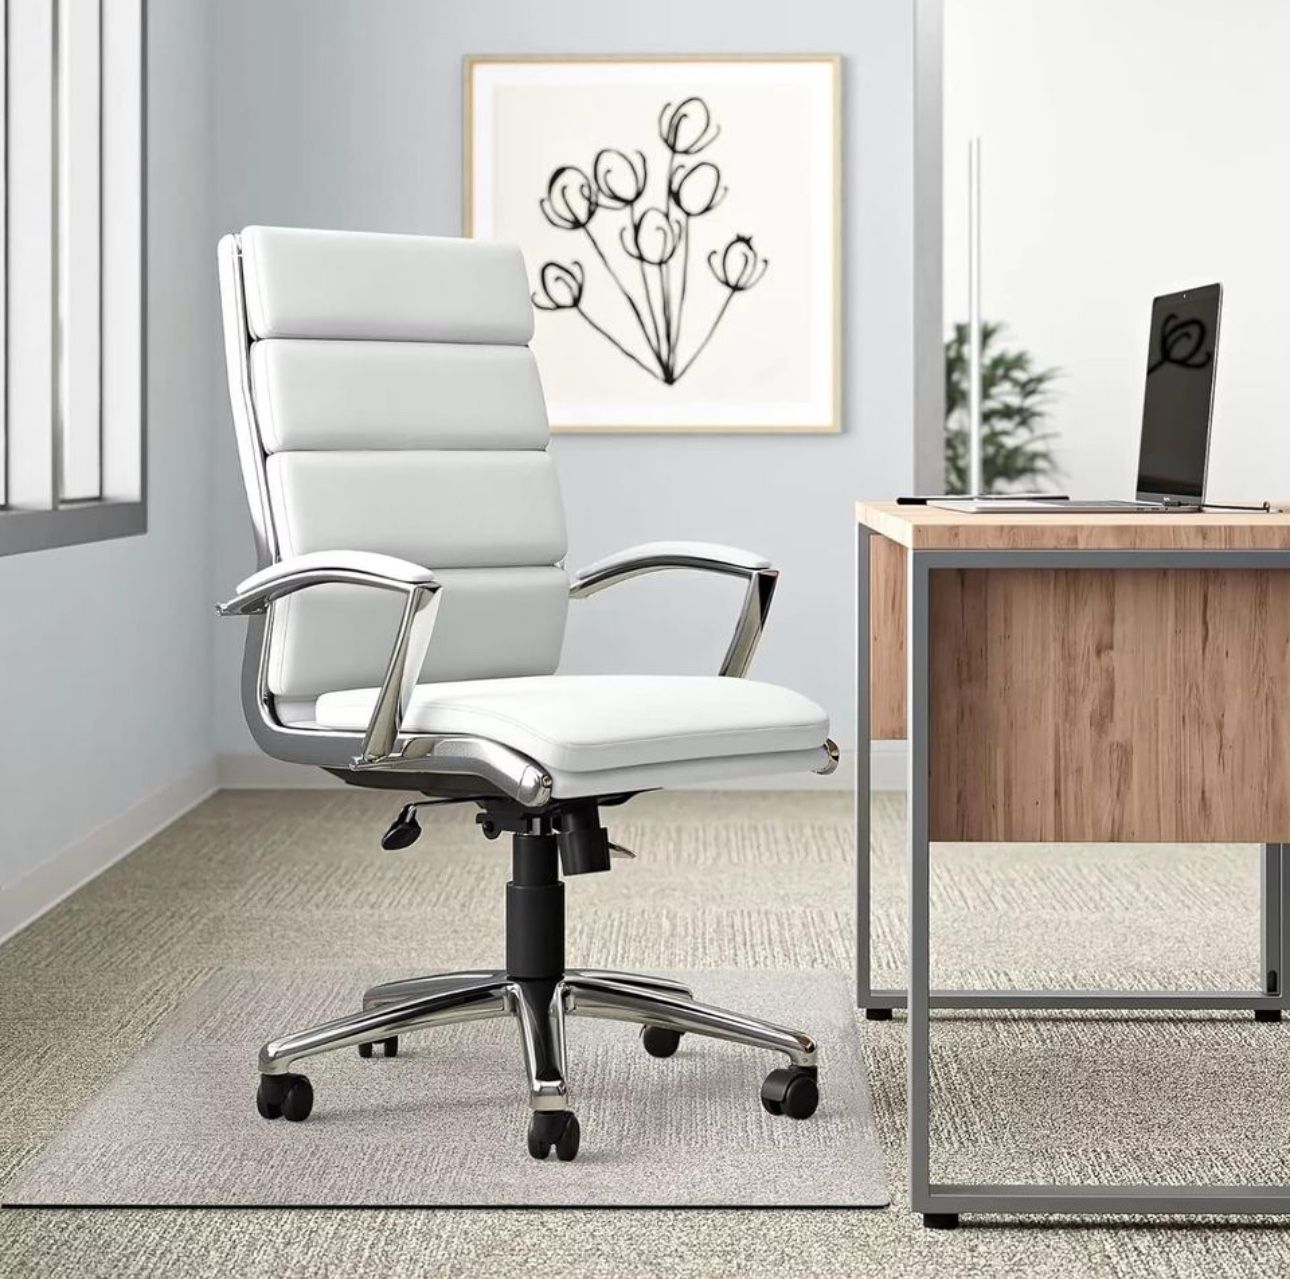 MIRUO 42" x 42" x 1/4" Chair Mat for Carpet Tempered Glass Chair Mat for Hardwood Floor Desk Chair